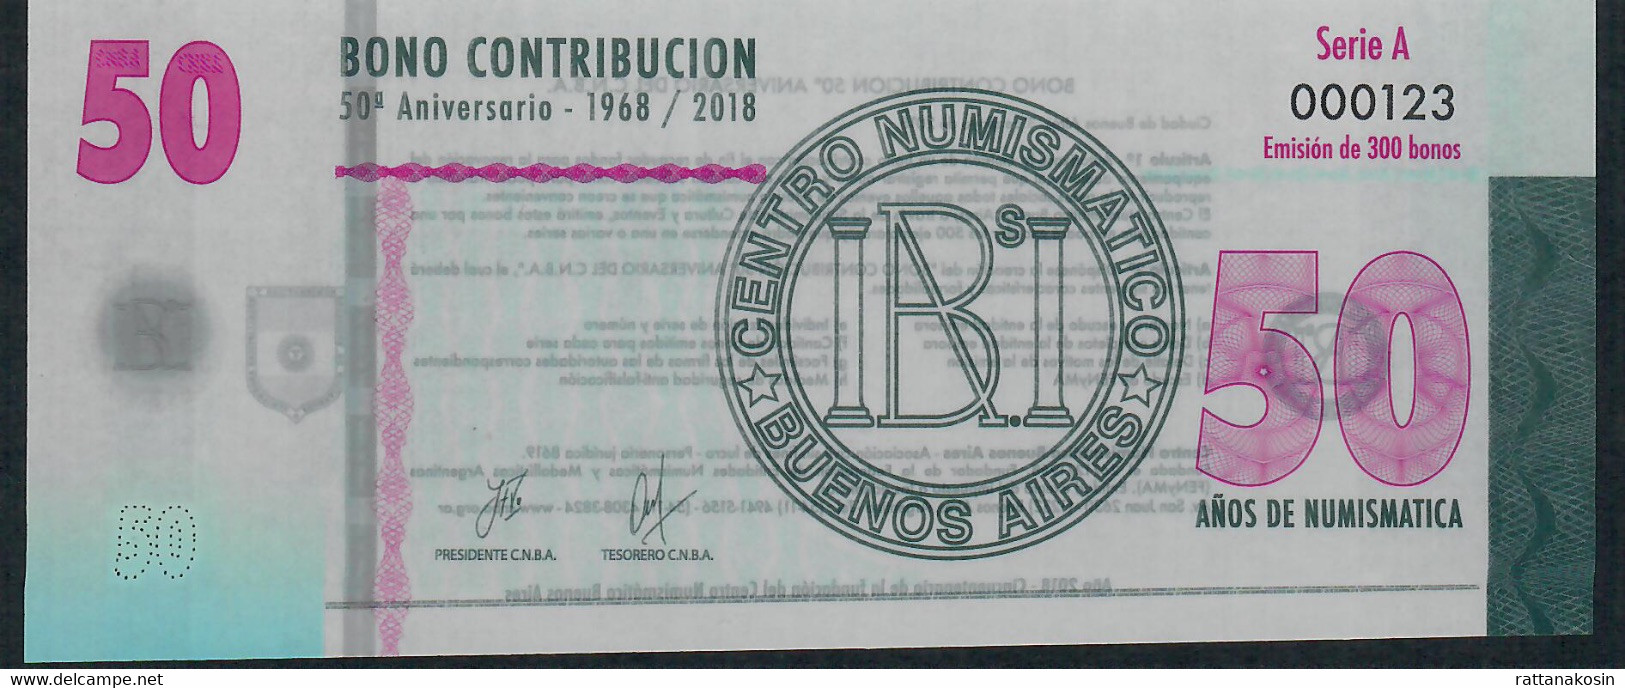 ARGENTINA BONO 50 Anos Numismatica NLP  50 PESOS 2014 Série A  #000123  UNC. - Argentine